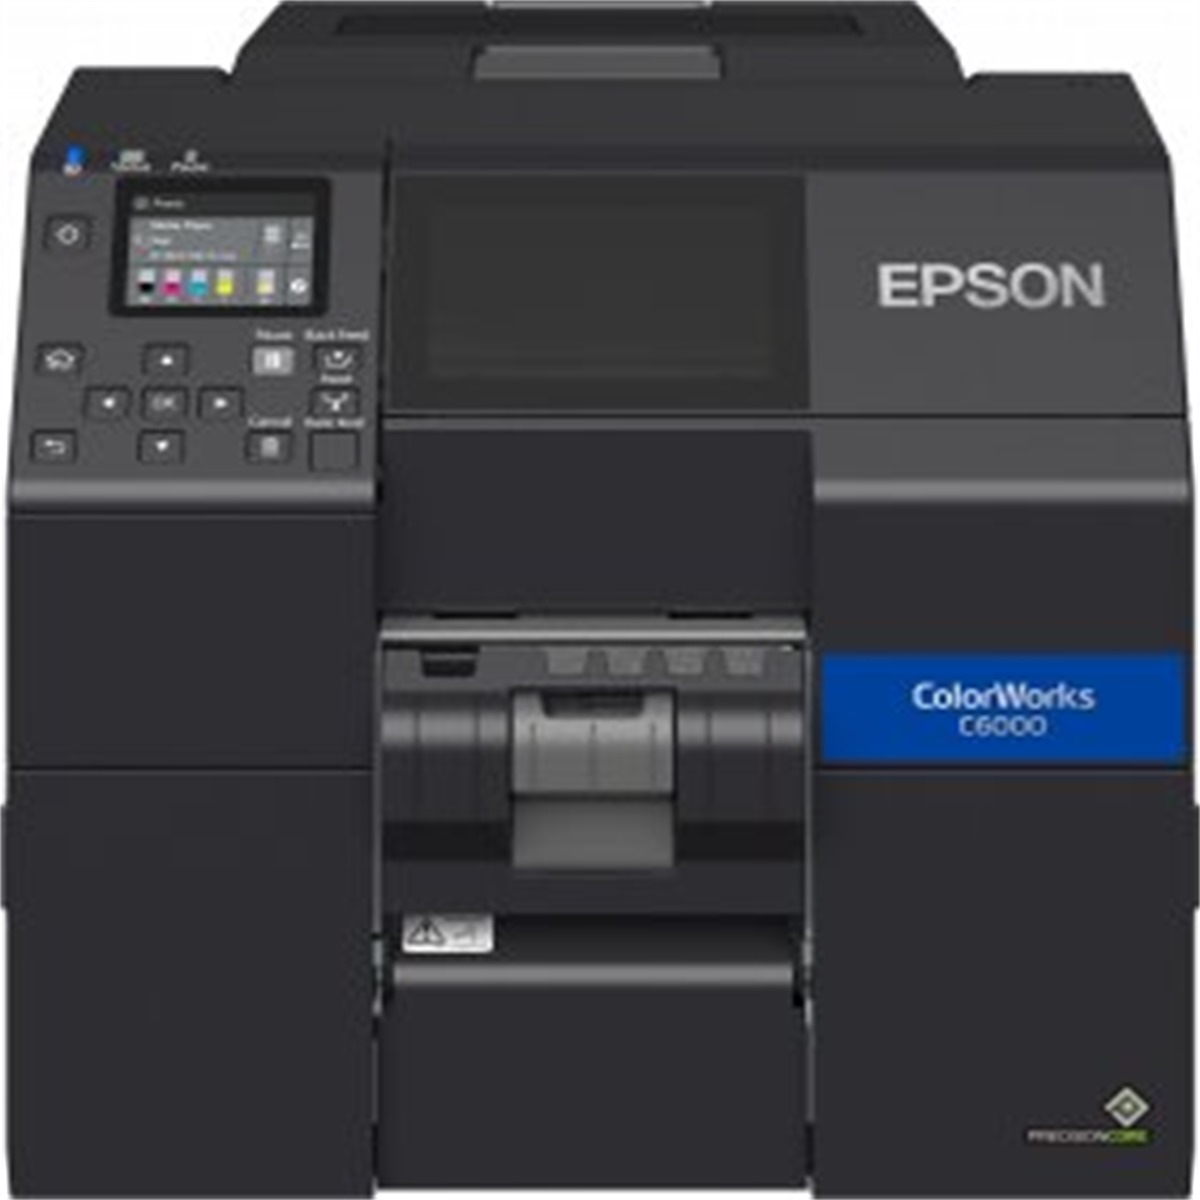 Epson C6000 colour label printer